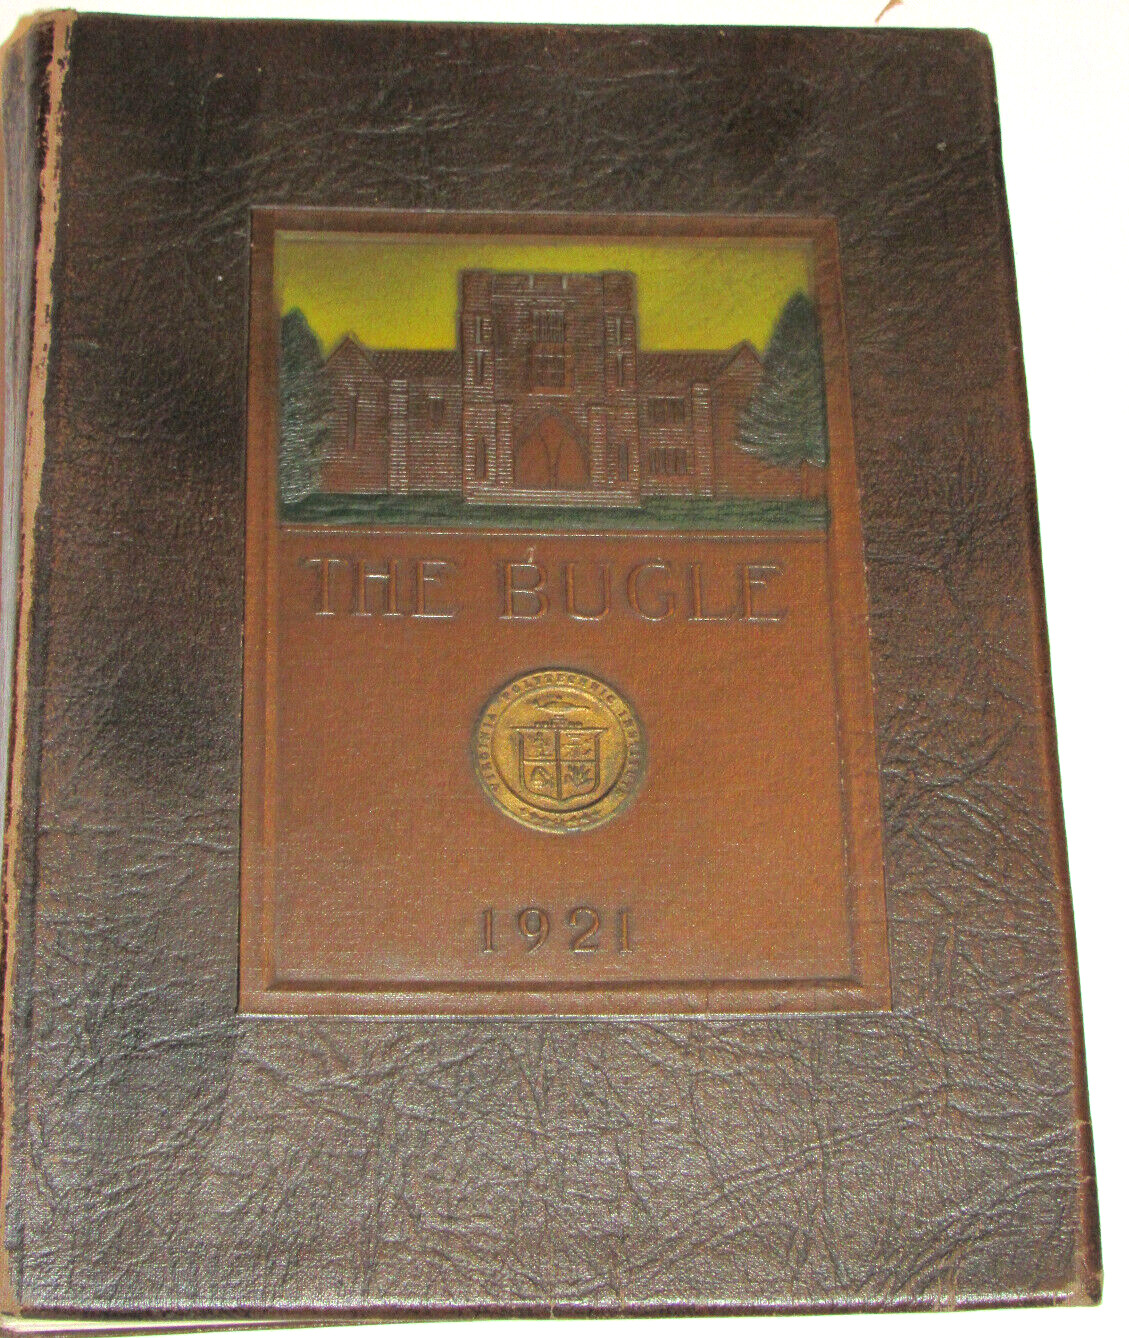 VTG 1921 VIRGINIA POLYTECHNIC INSTITUTE YEARBOOK THE BUGLE SENIORS/SPORTS/ADS